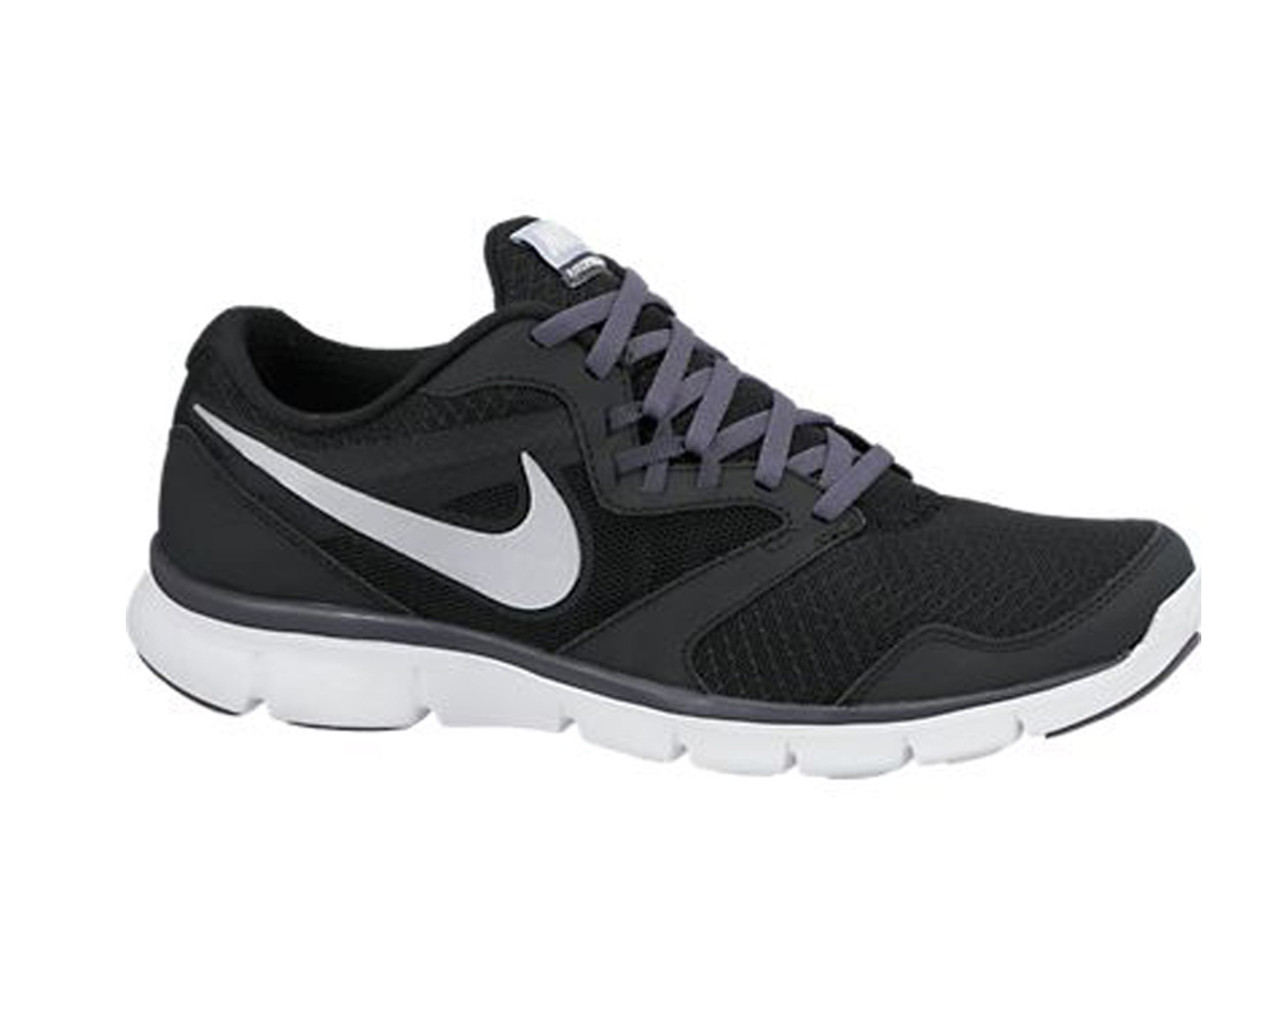 Nike Women's Flex Experience Run 3 Running Shoes - Black/Dark Grey/Metallic Silver | Discount Nike Ladies Athletic & More - Shoolu.com |